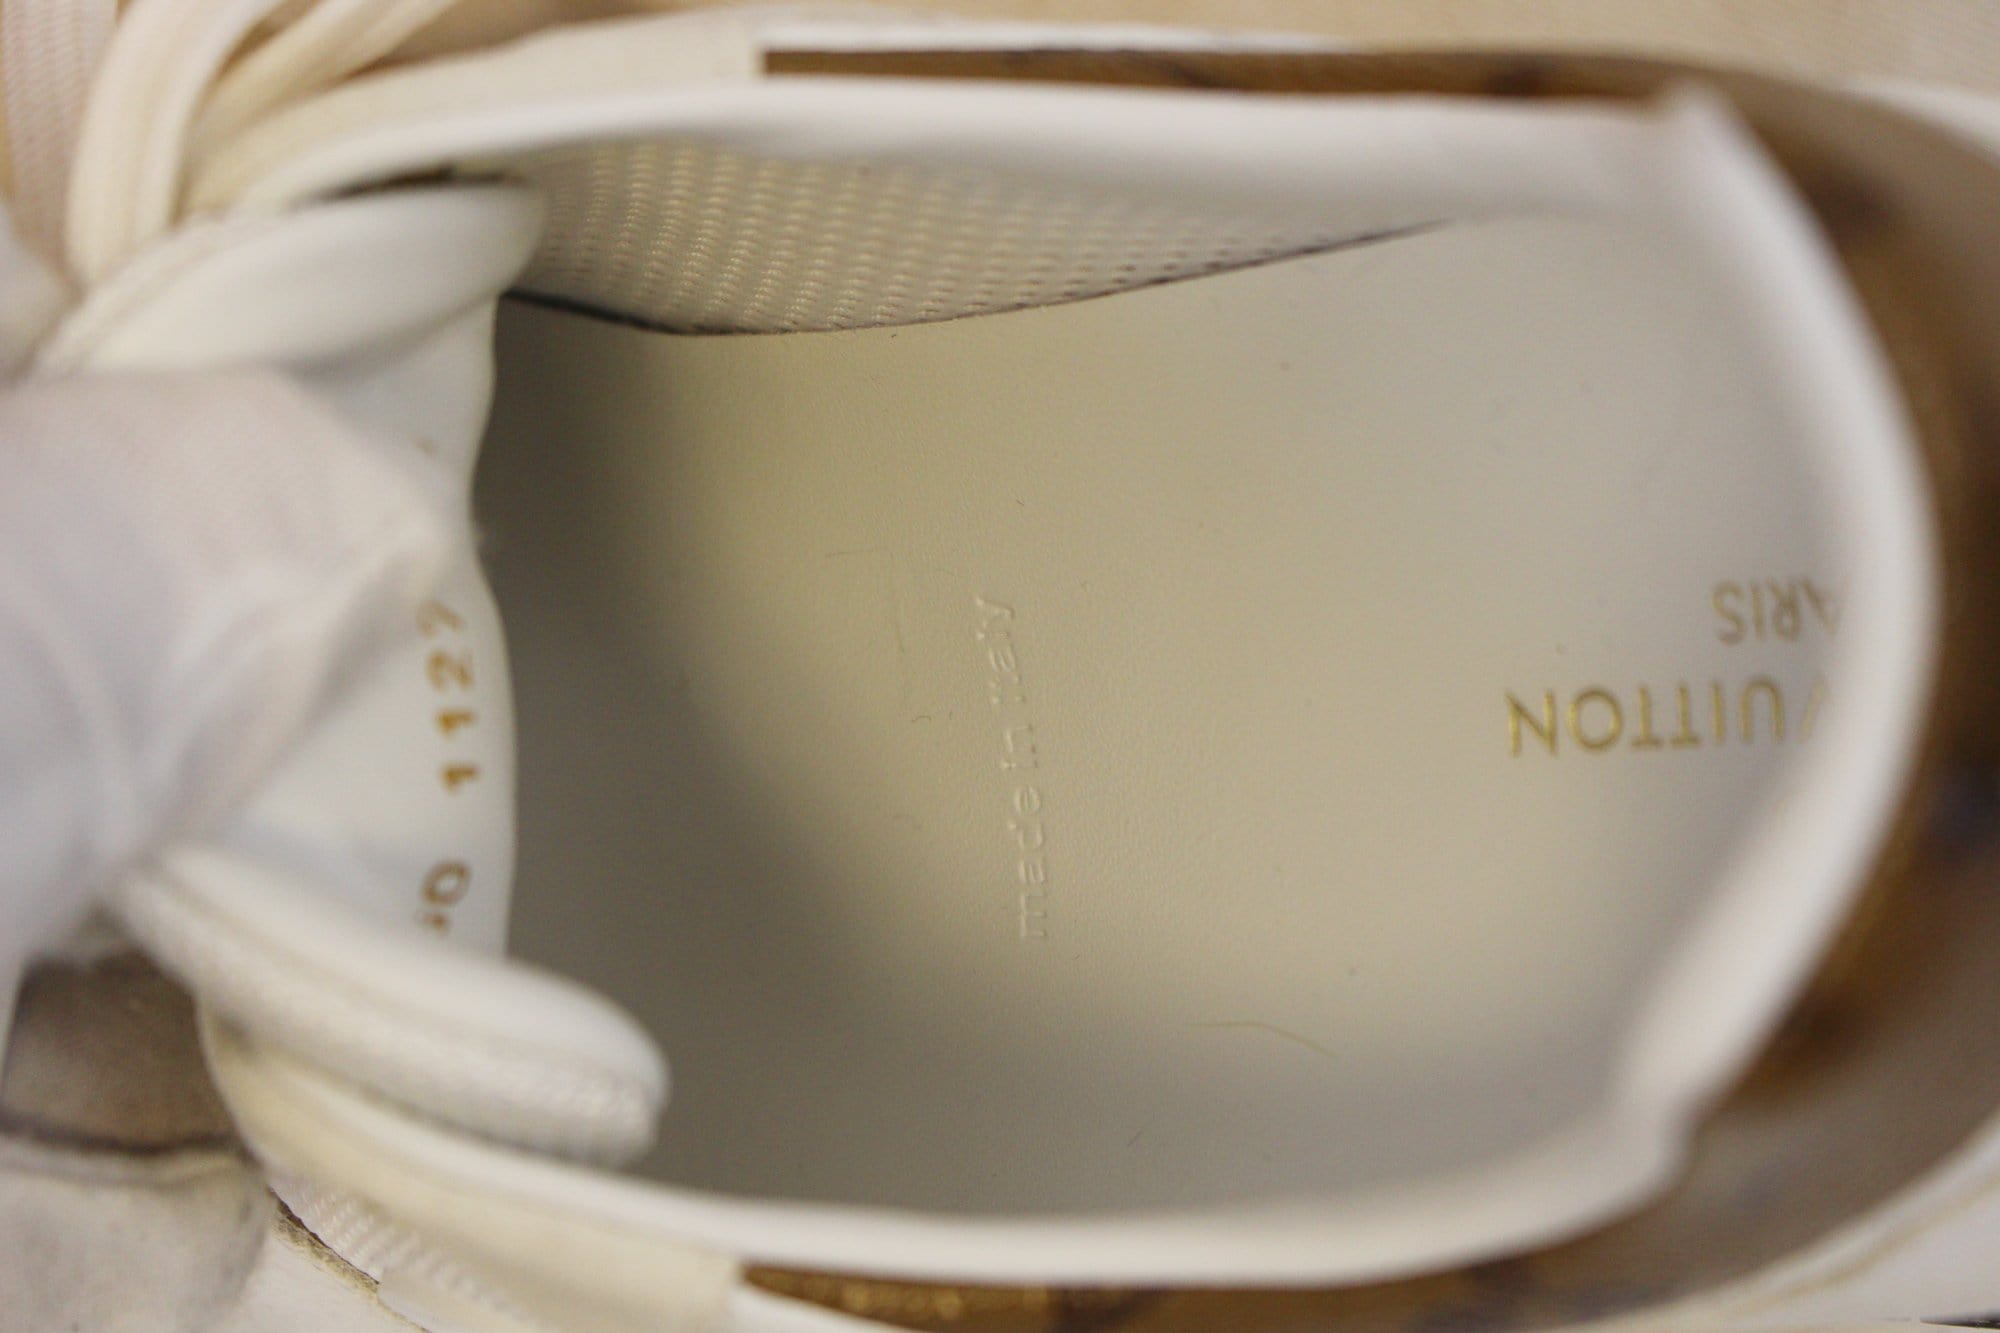 Louis Vuitton, Shoes, Louis Vuitton Runaway Sneakers Size 38